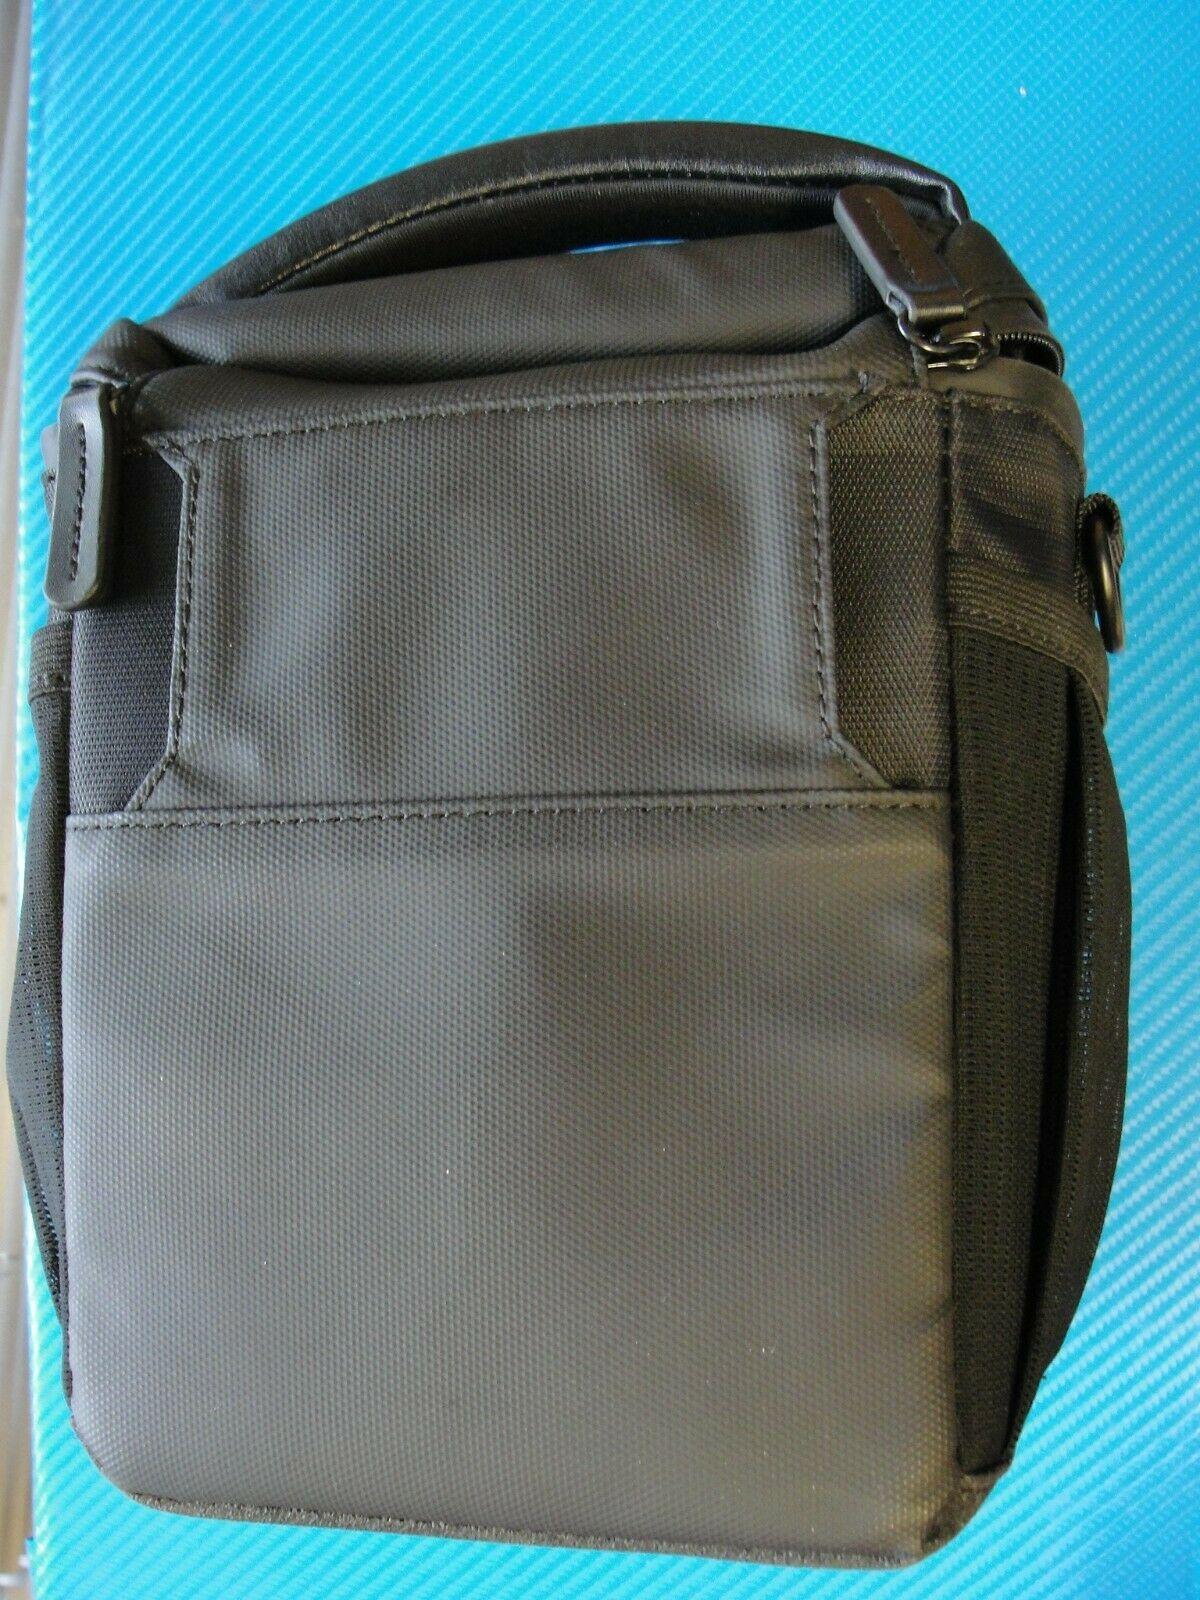 DJI Mavic Pro /Platinum Drone Genuine DJI Carrying Protective Bag Case +Shoulder